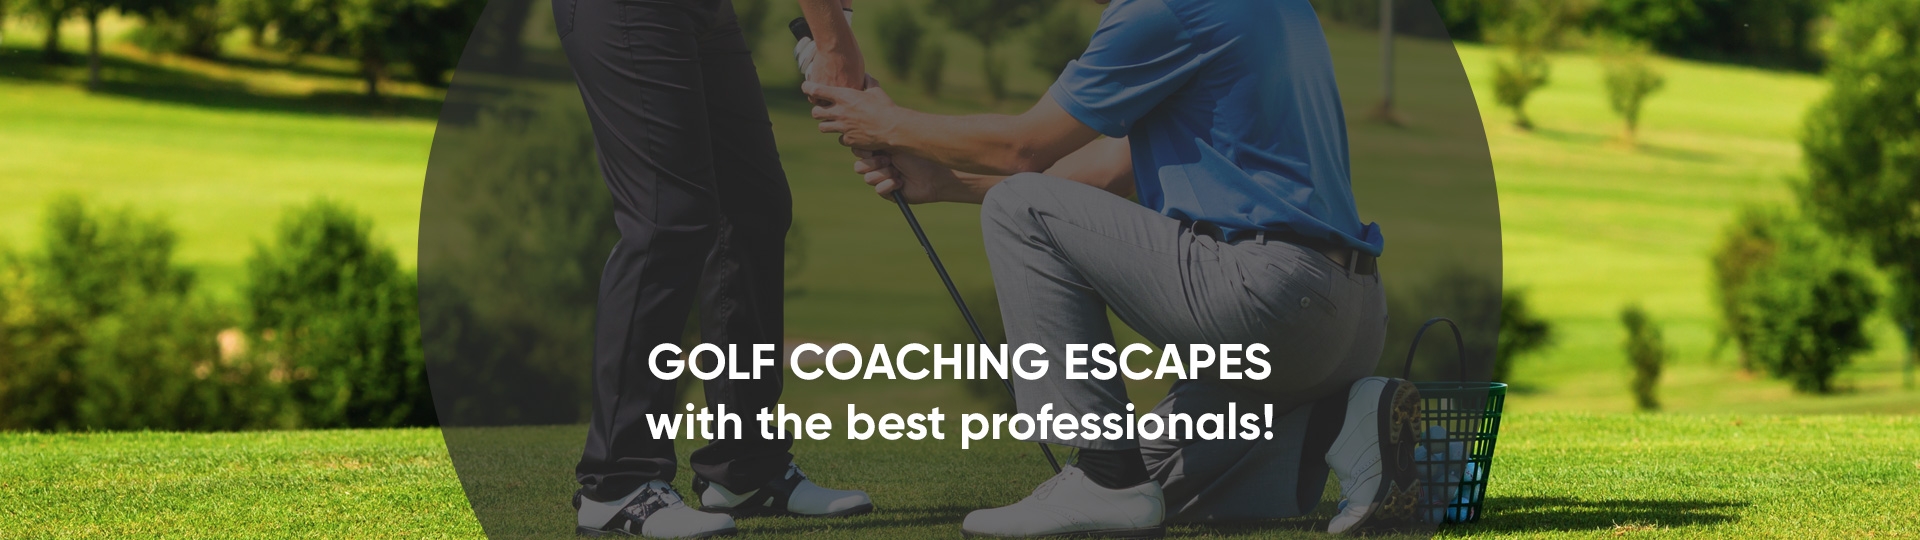 Golf Coaching Escapes